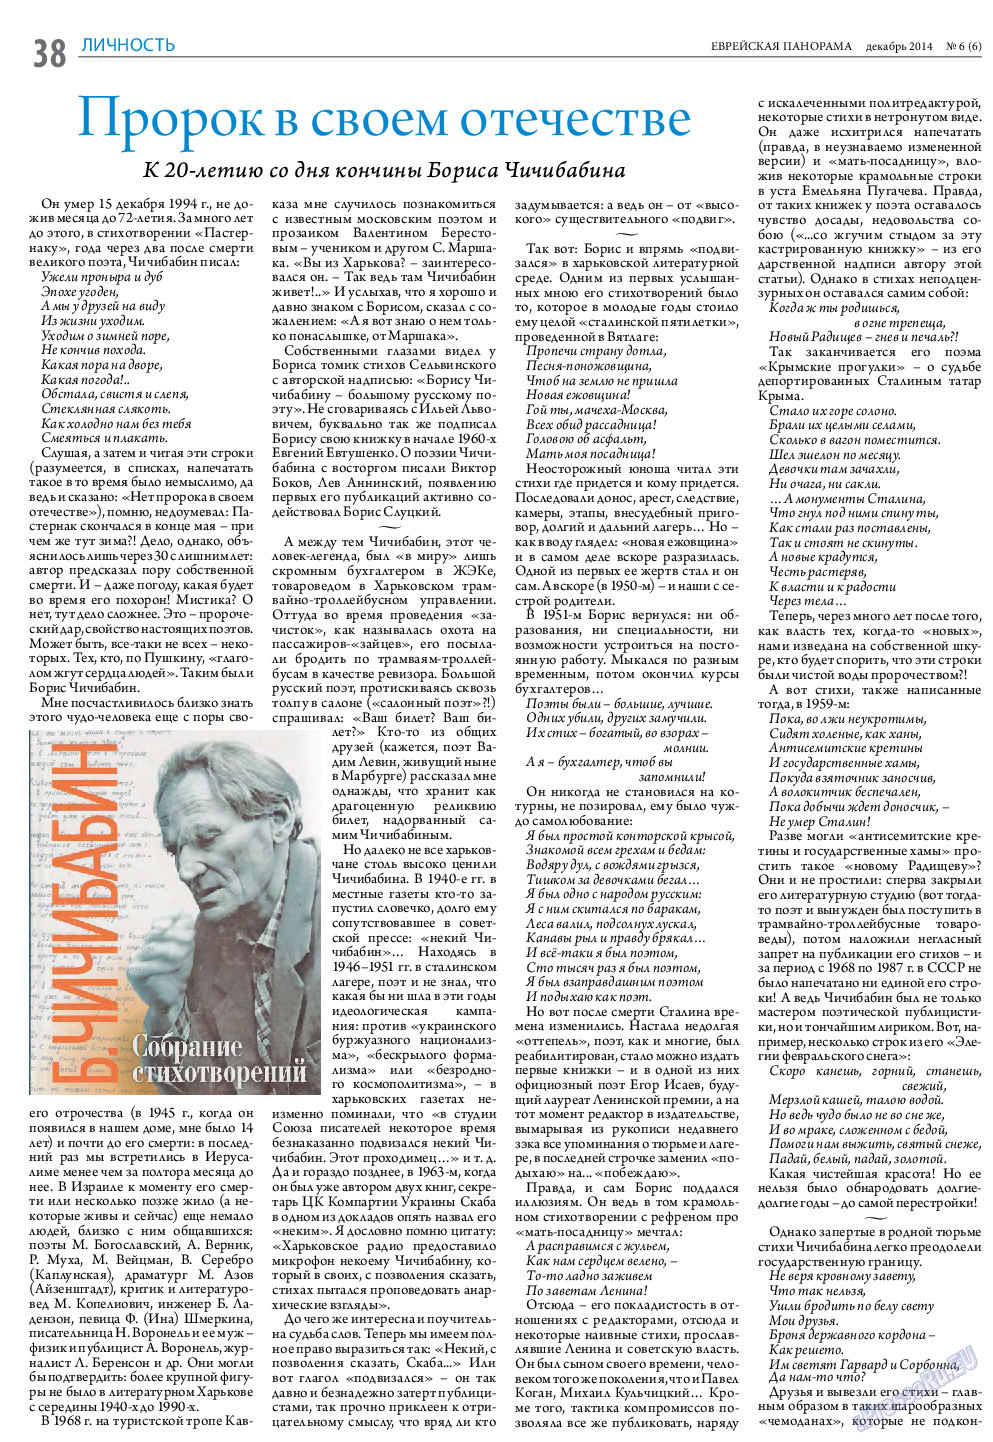 Еврейская панорама, газета. 2014 №6 стр.38